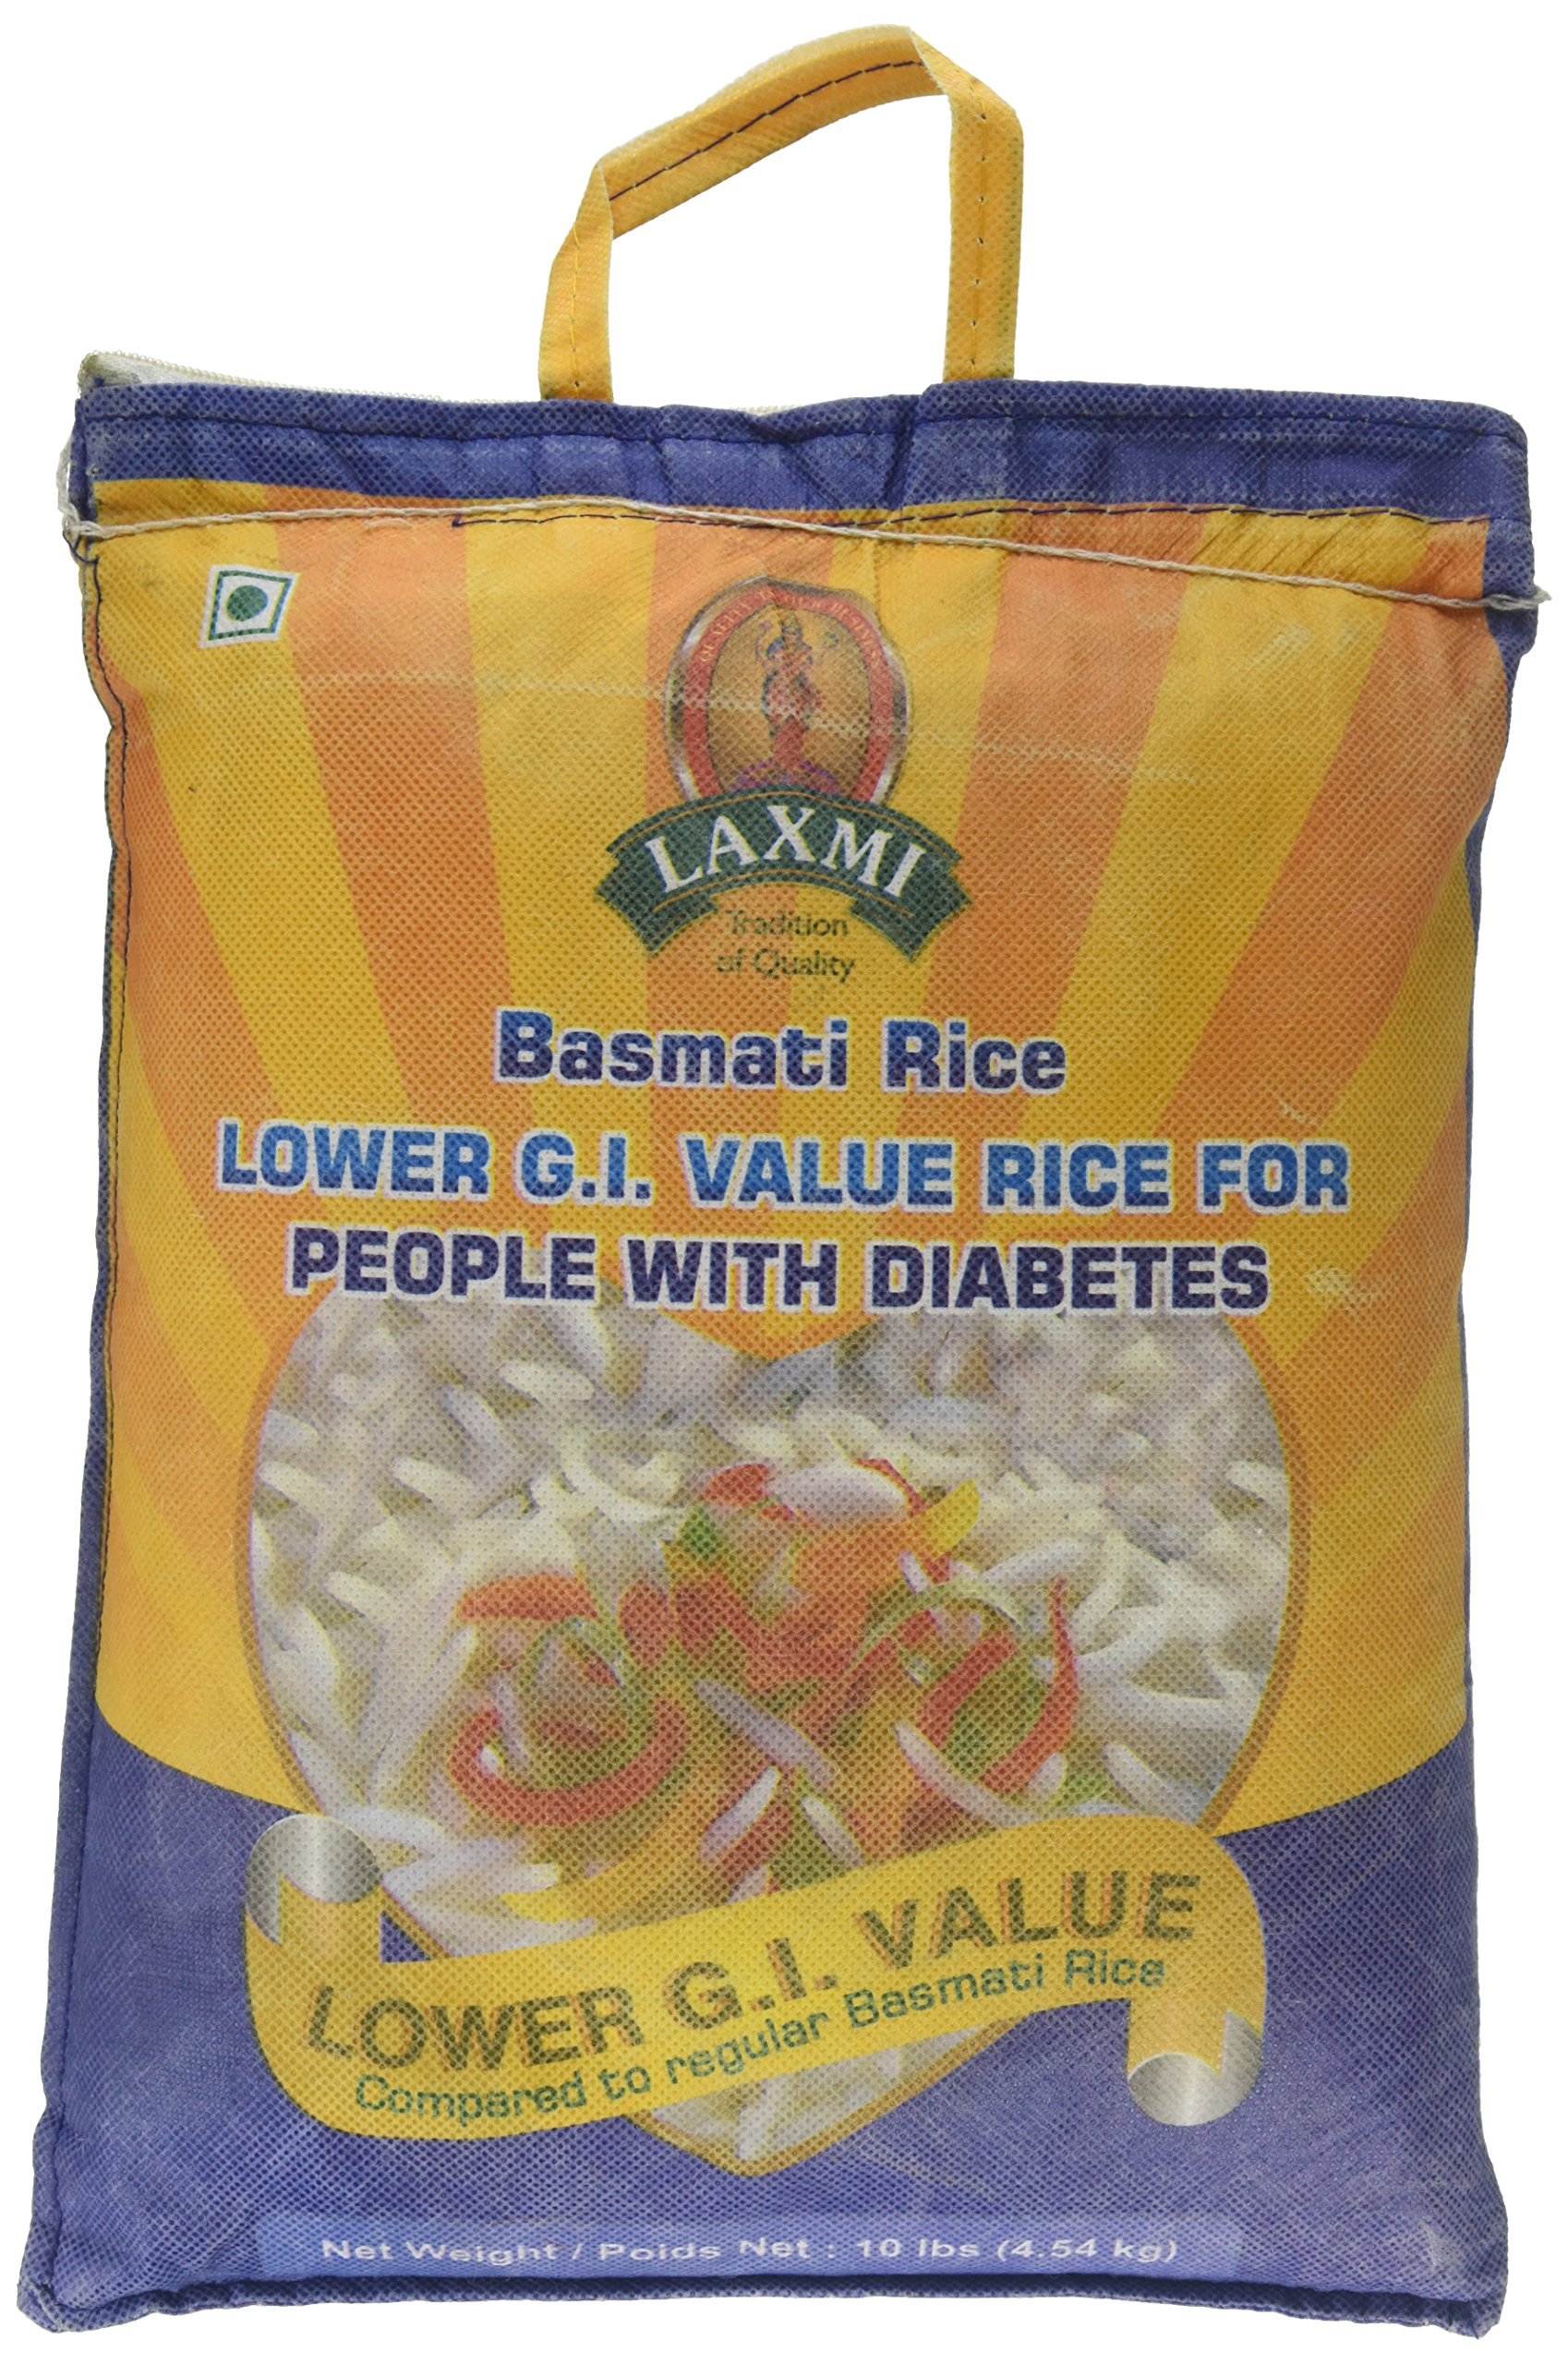 is basmati rice healthy for diabetics